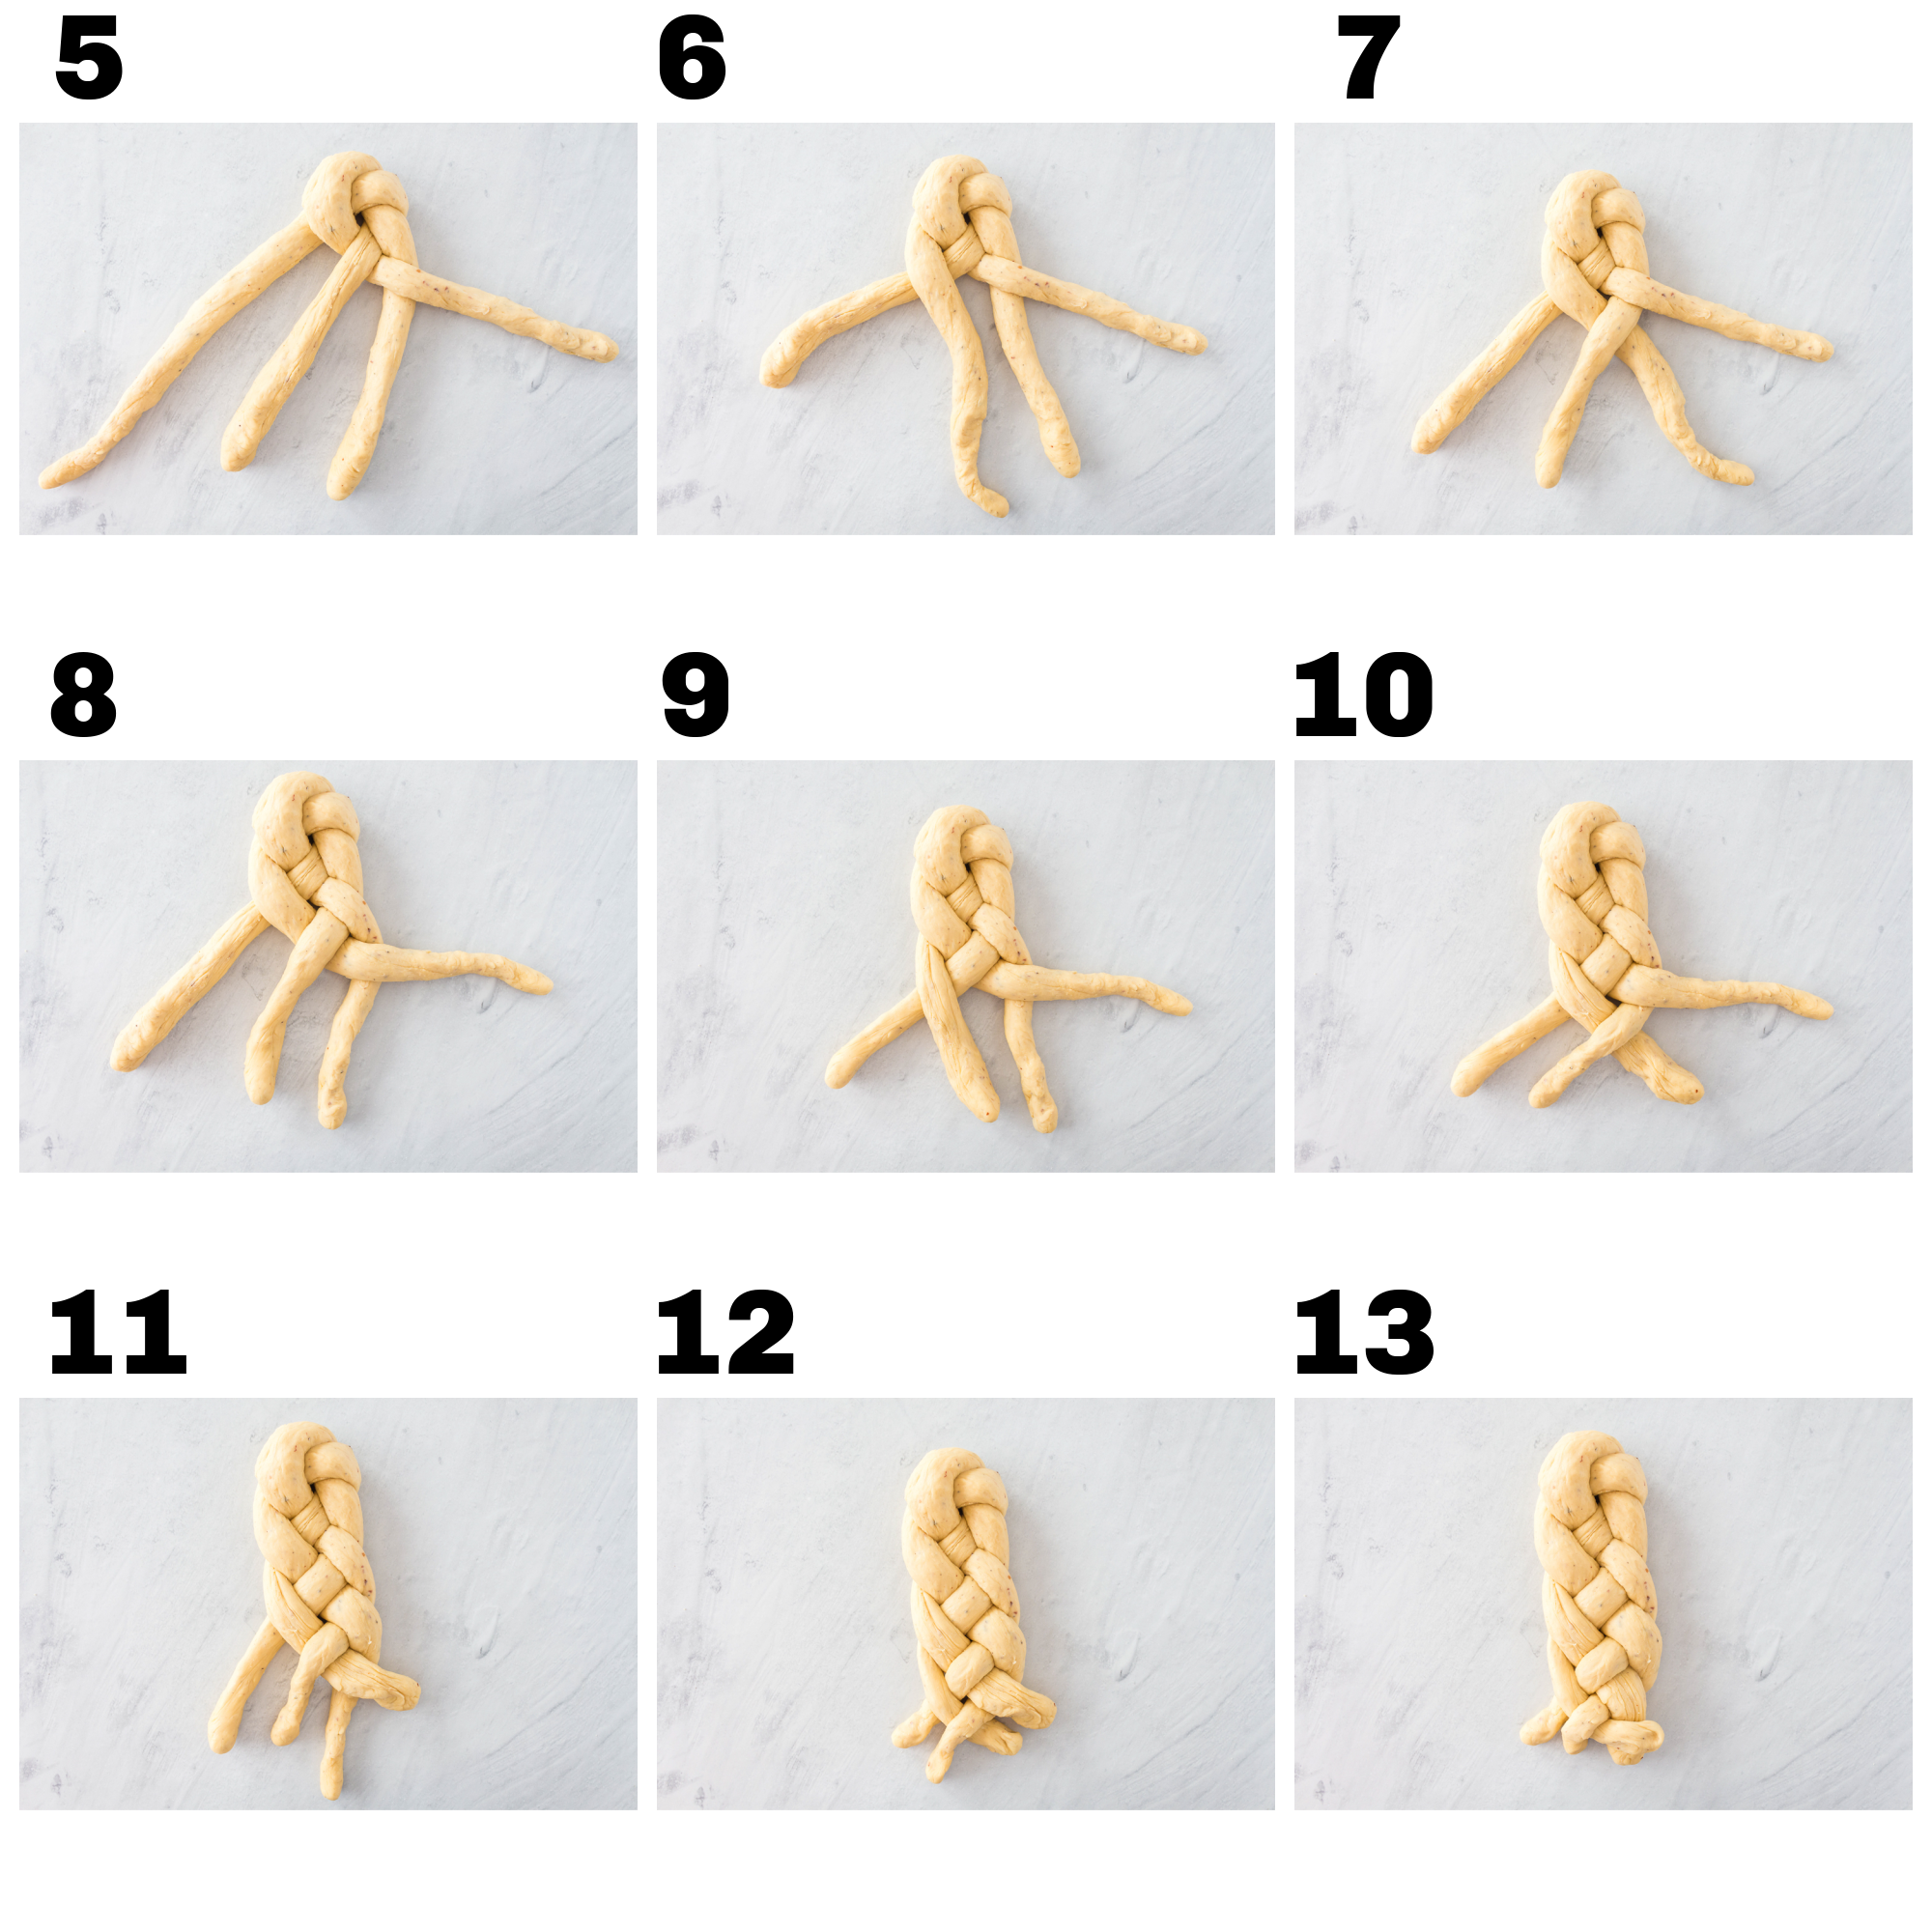 Instructions 5-13 steps on braiding bread.